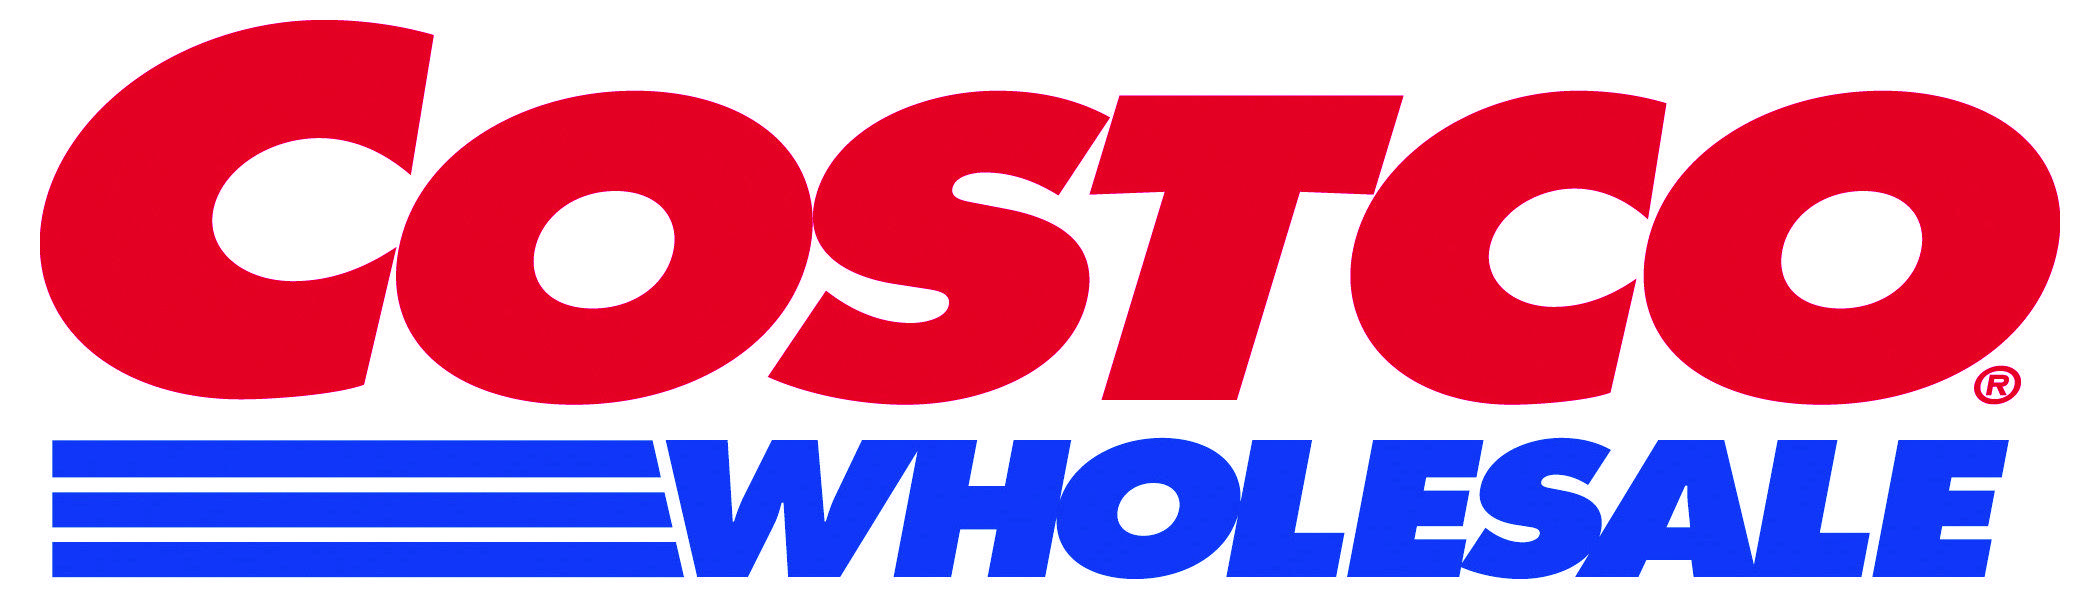 Costco App Logo - Wholesale Products Australia | Costco